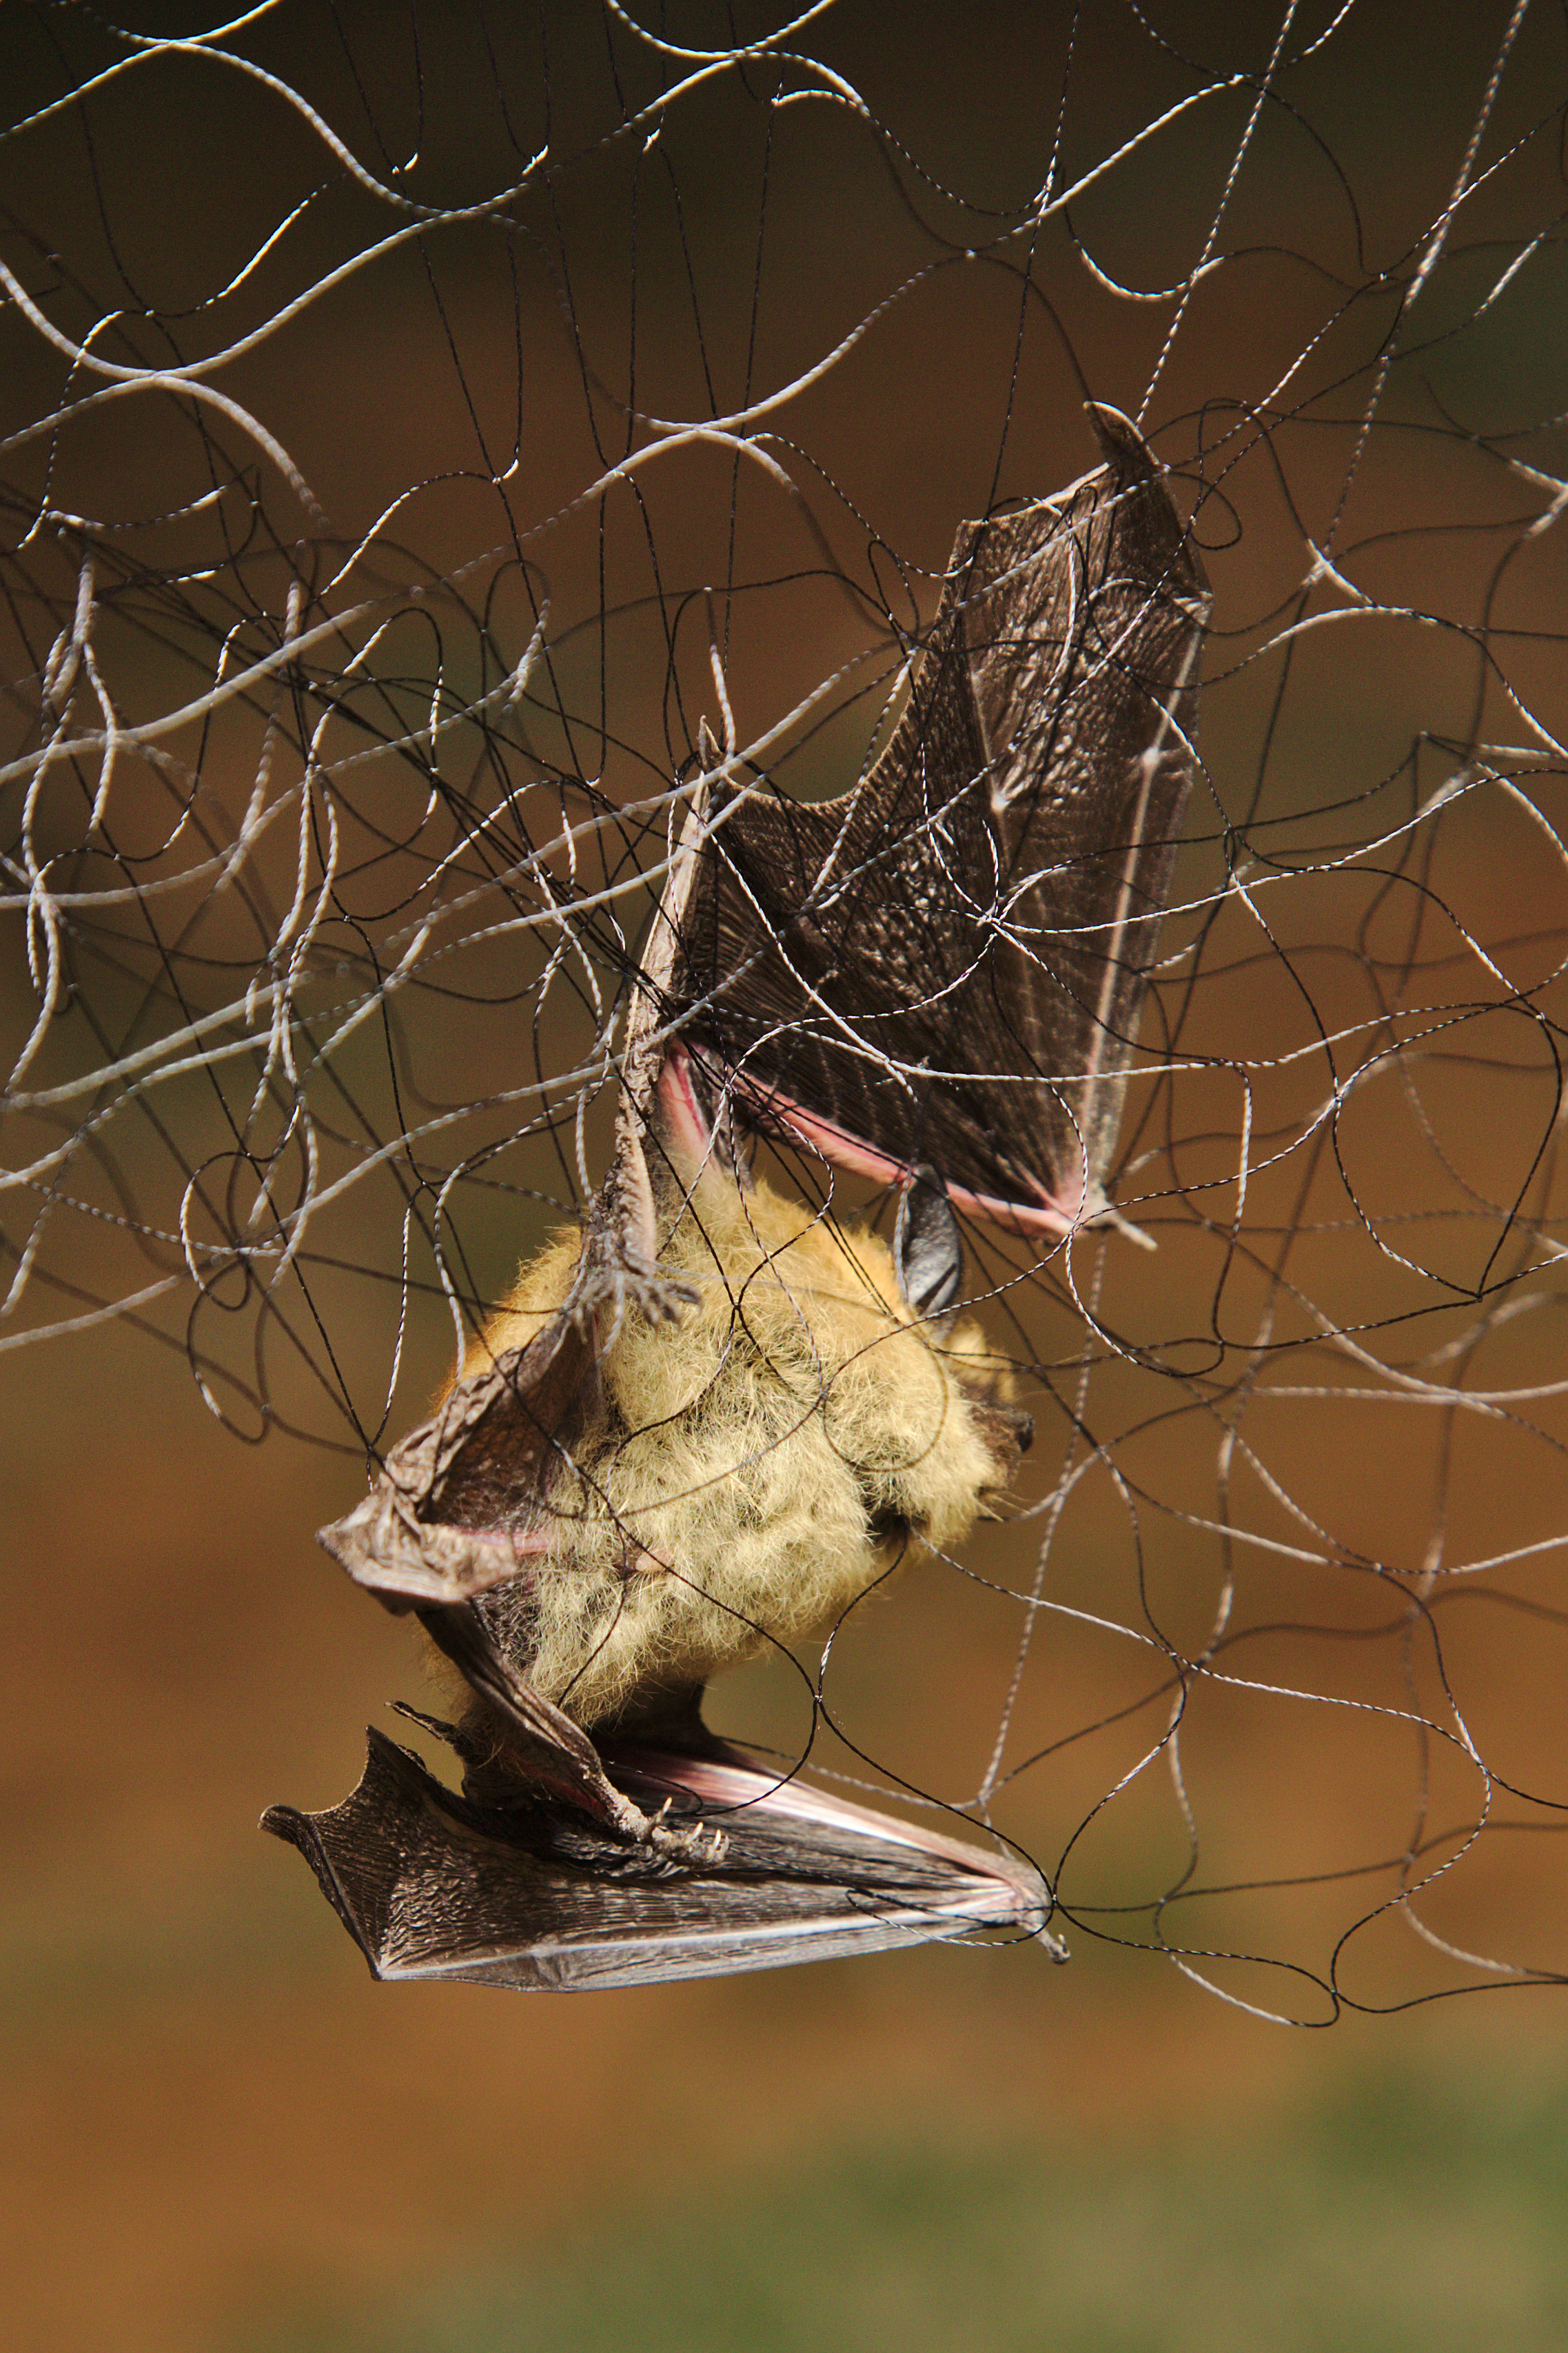 Myotis sp. caught in the mist net